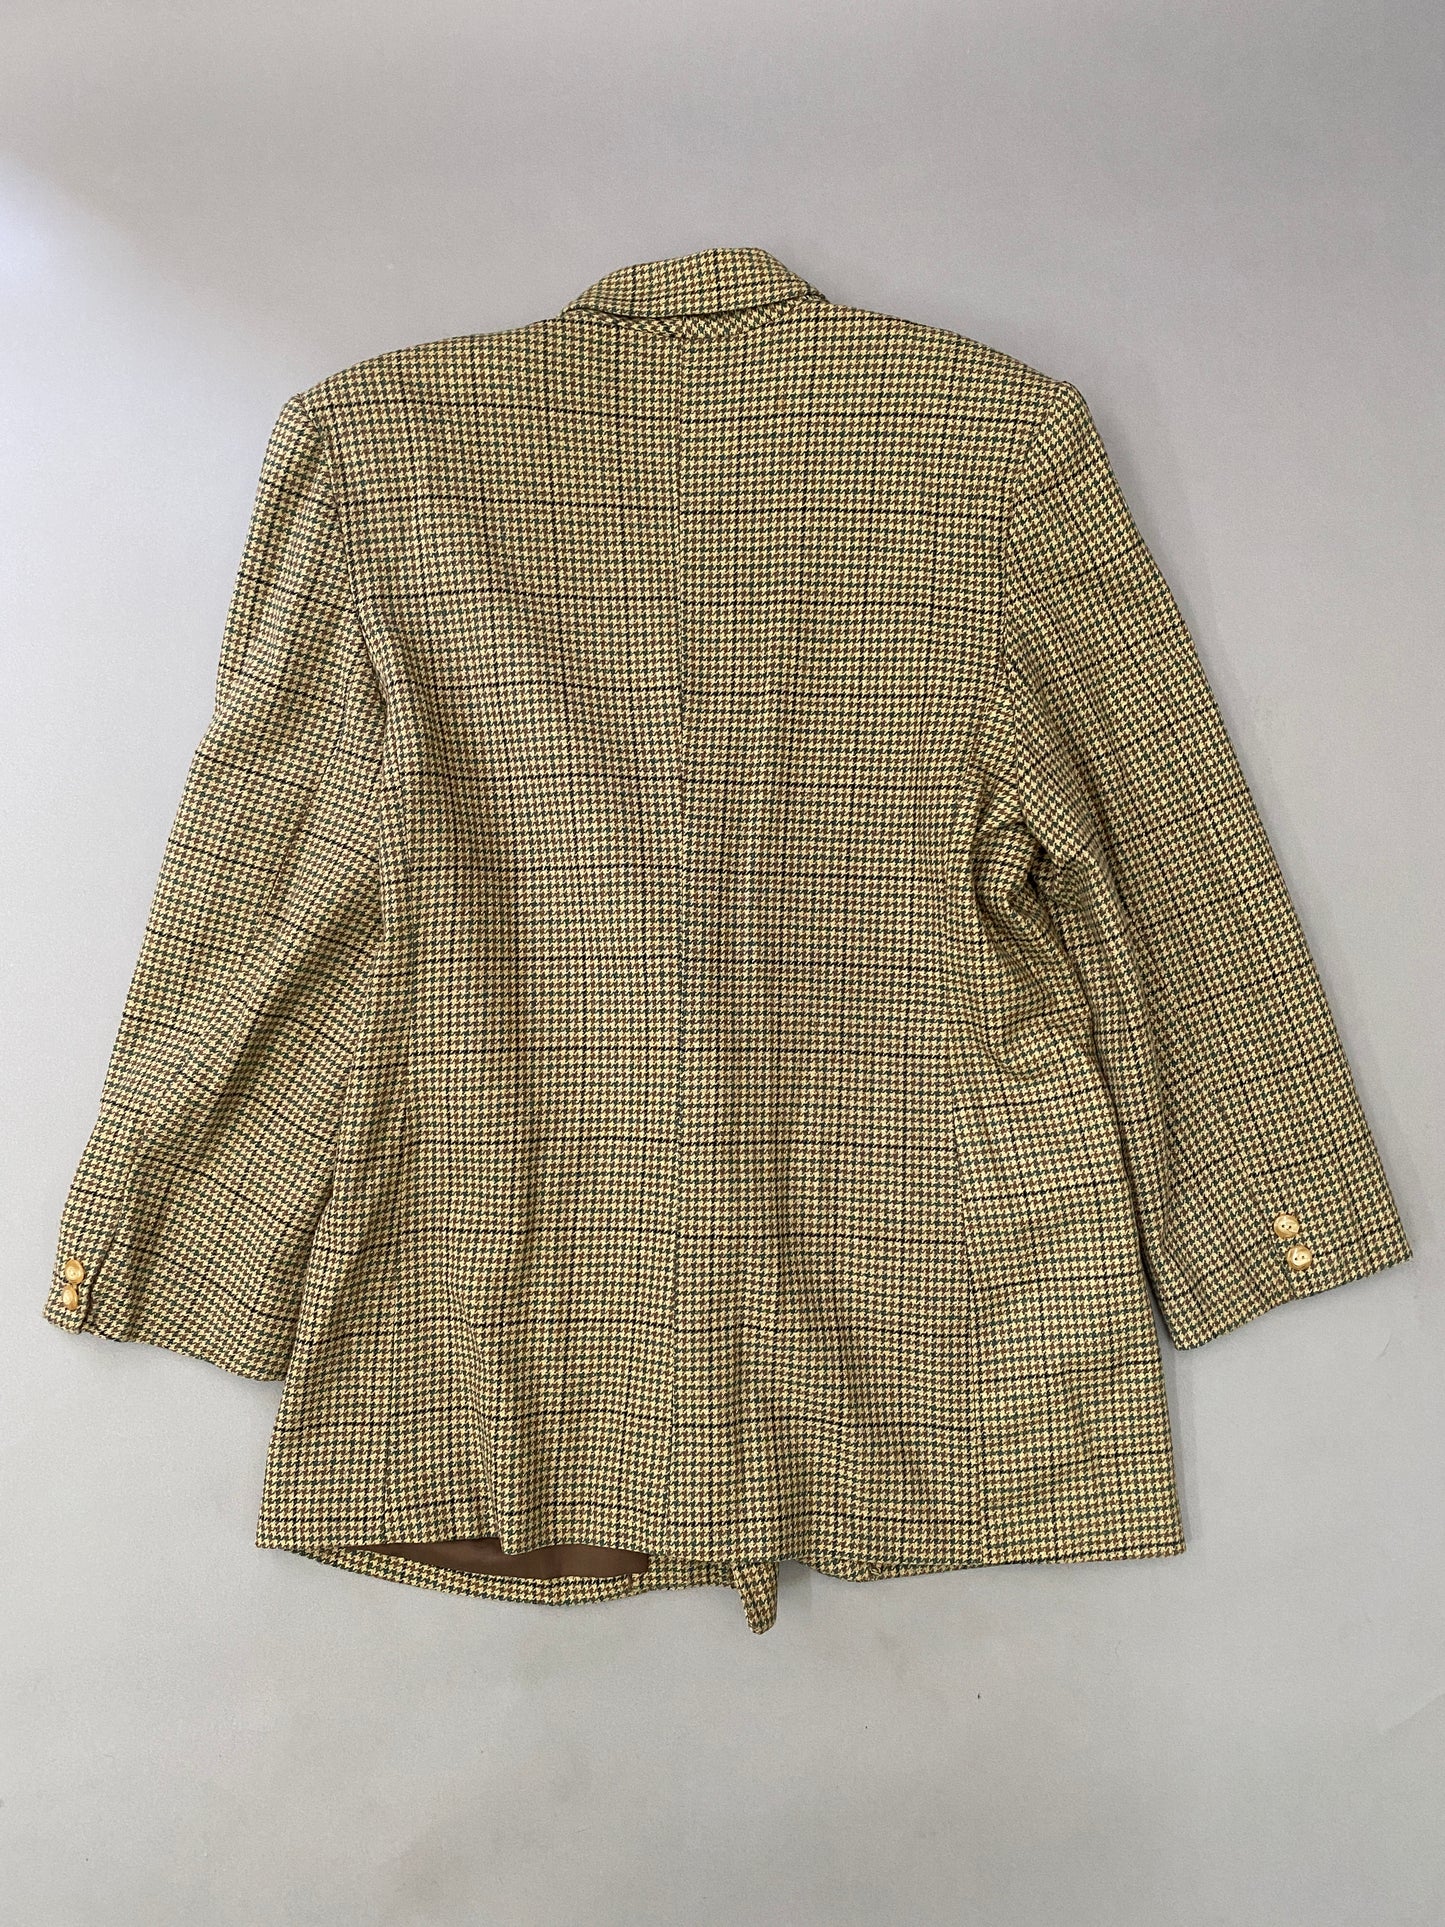 Vintage Pollyarra Coat